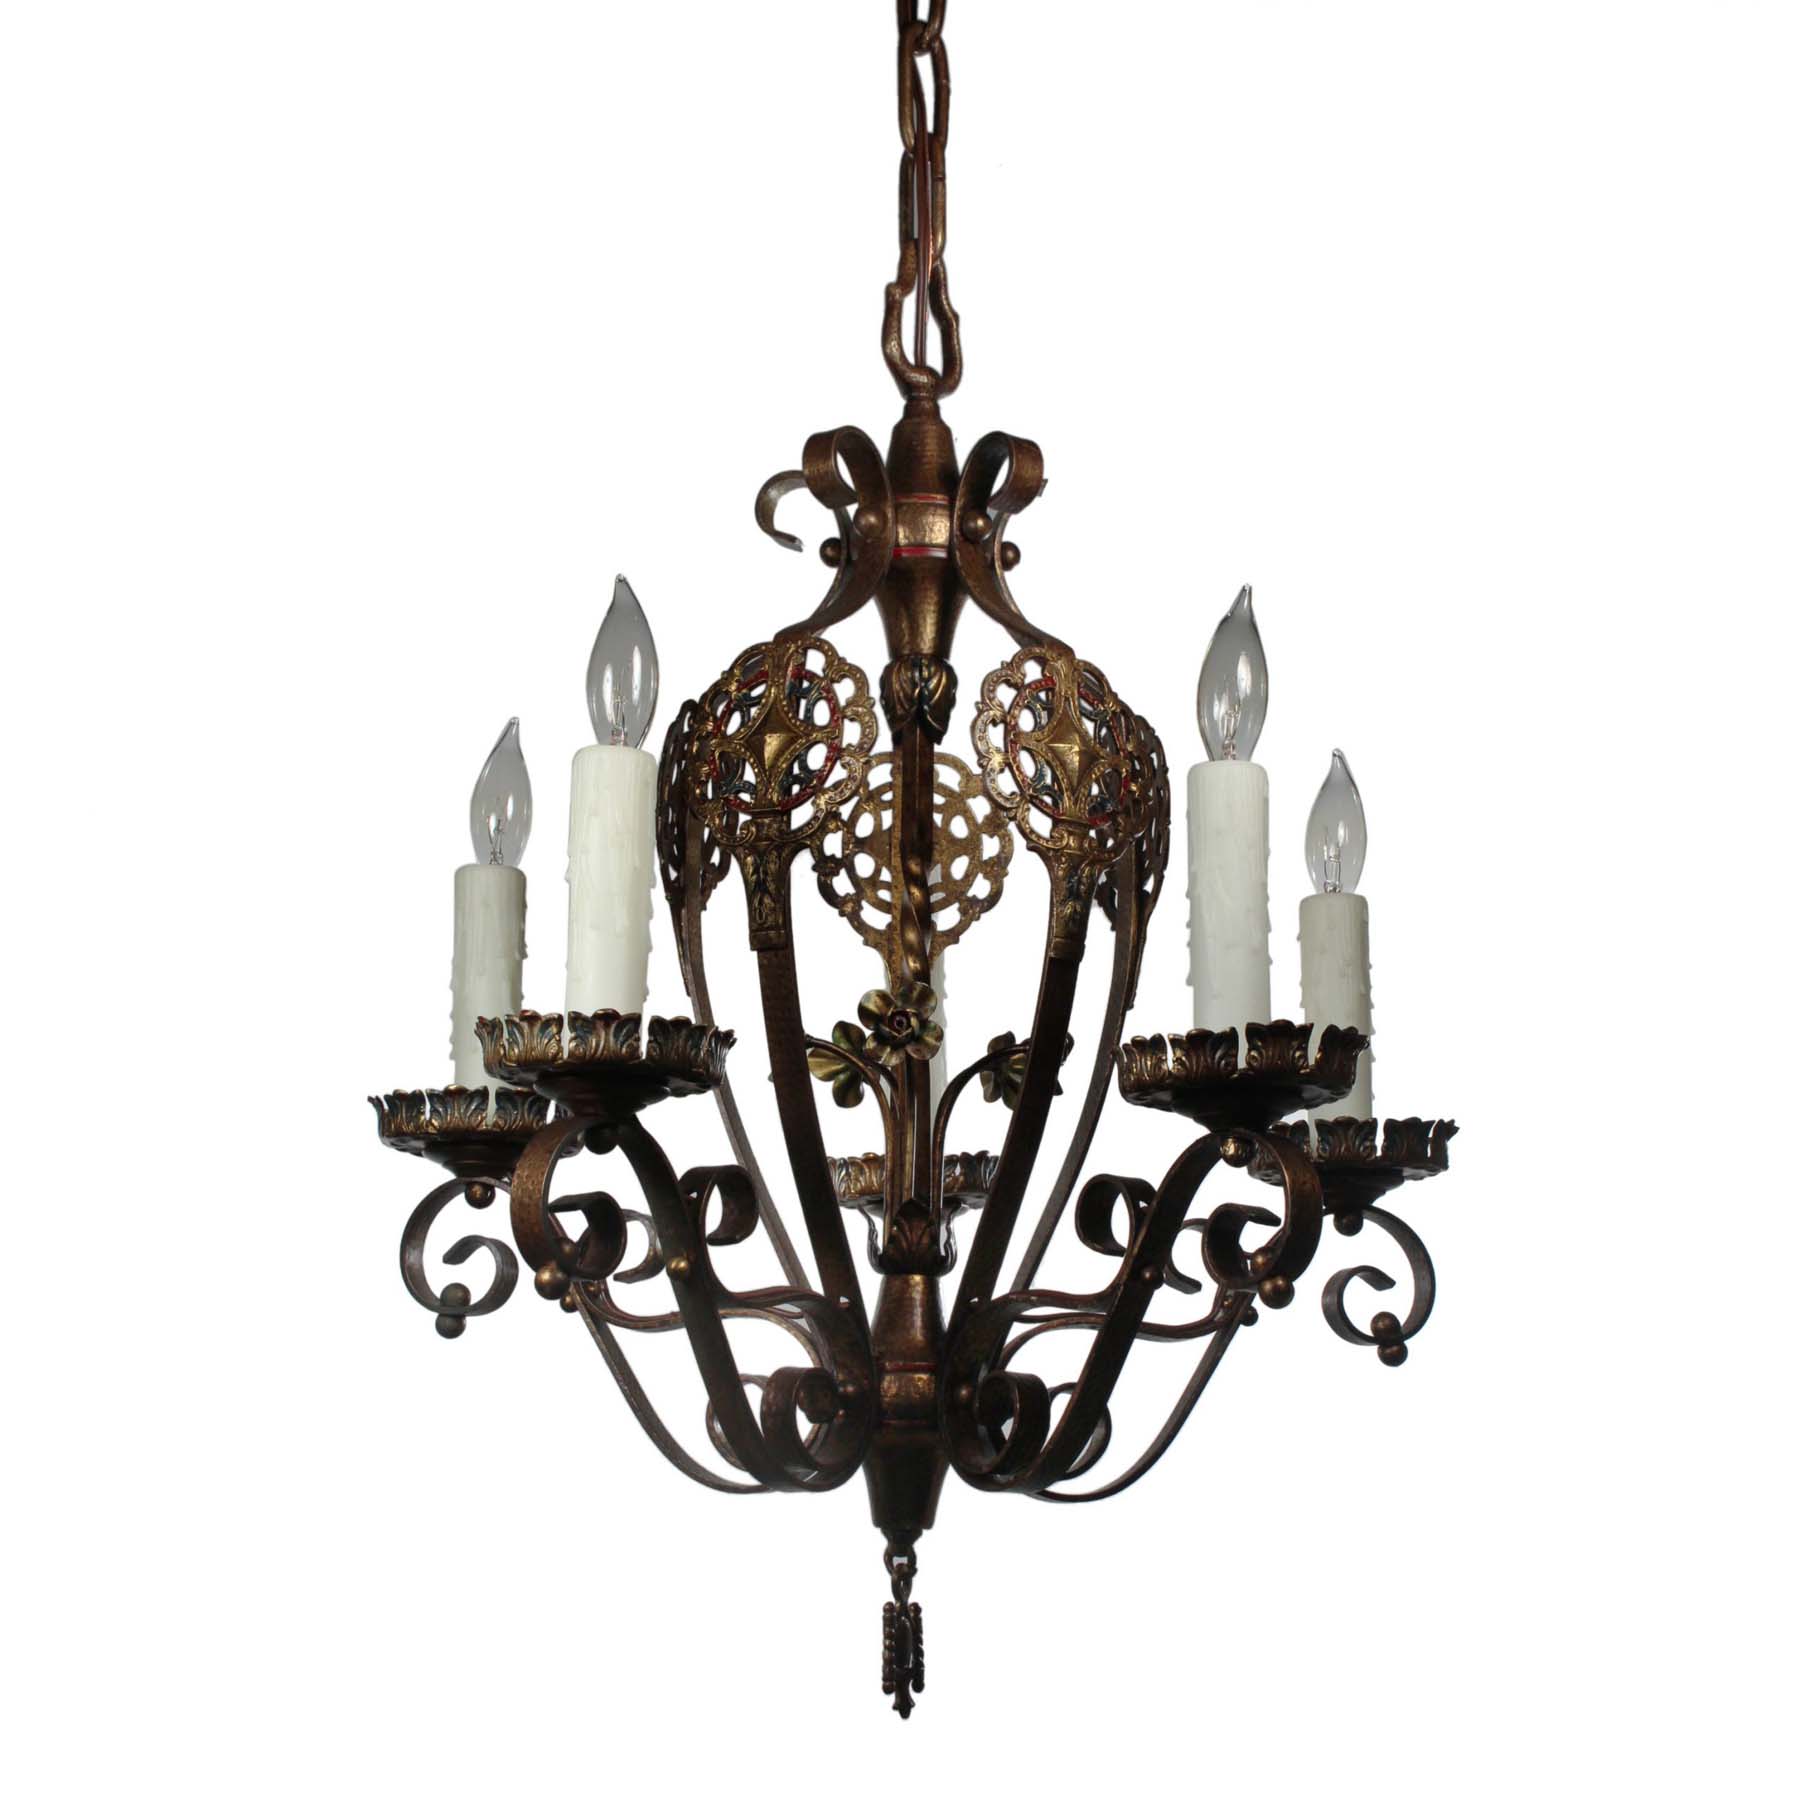 SOLD Antique Bronze Spanish Revival Five-Light Chandelier -0